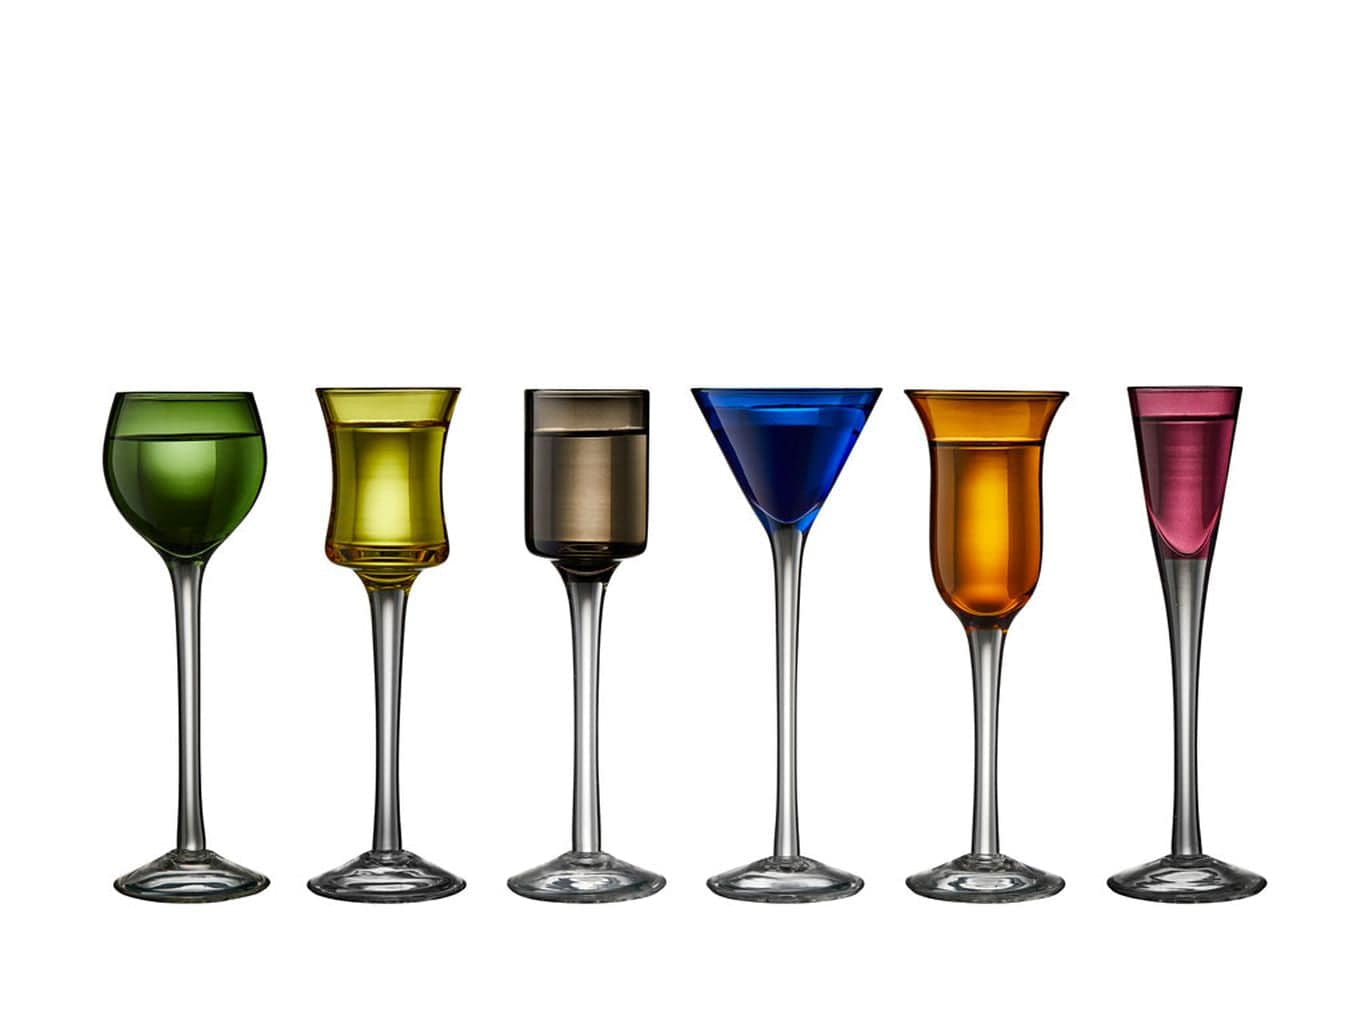 Lyngby Glas Schnapps Glass forskellige farver, 6 stk.